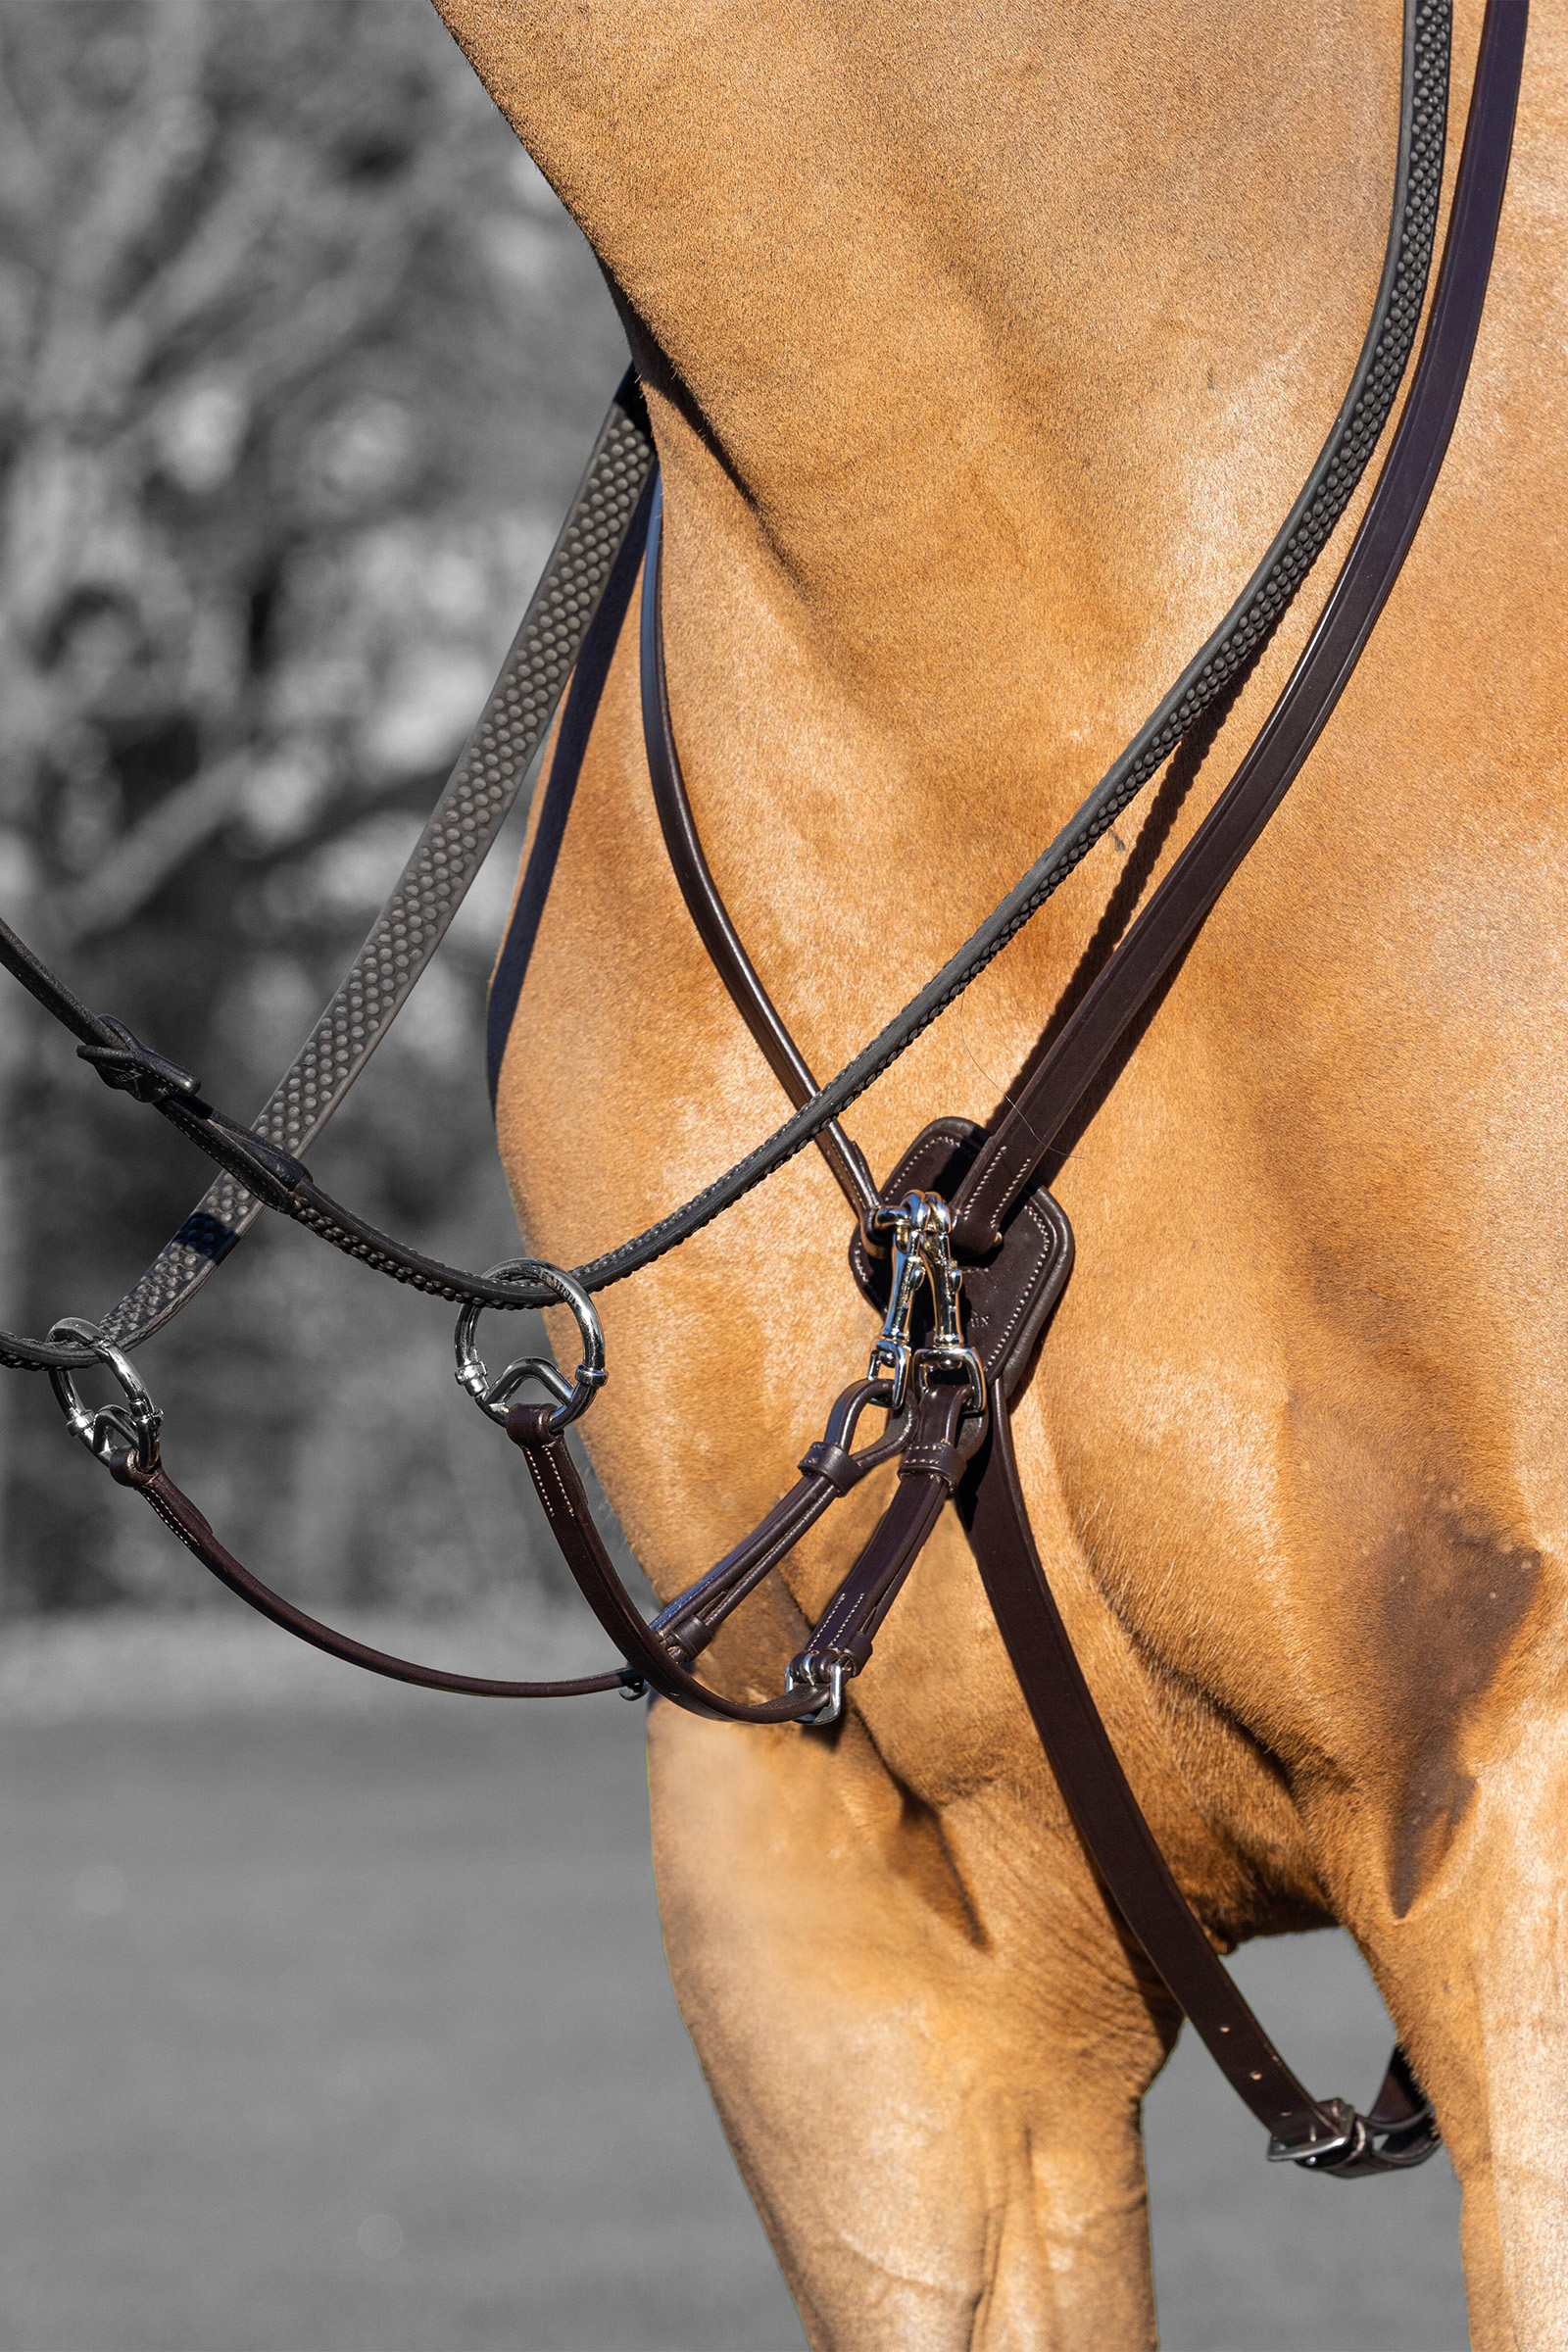 Selle Waldhausen Premium - Selle cuir cheval - Le Paturon